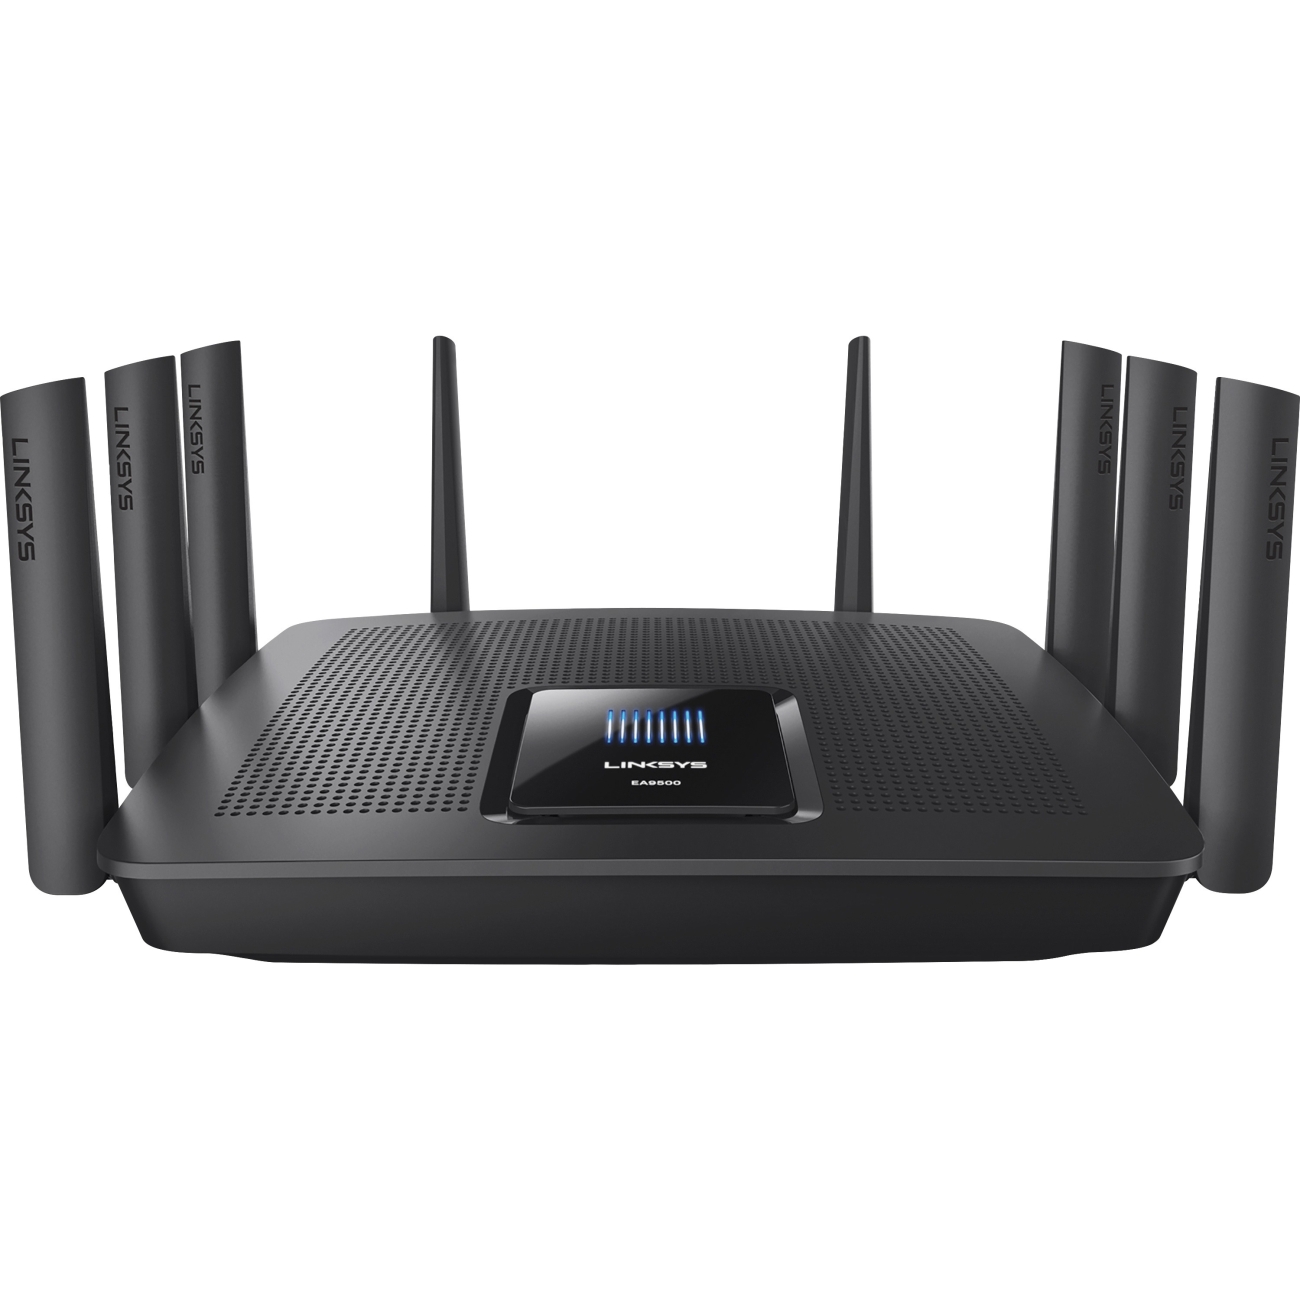 Linksys EA9500 Max-Stream Gigabit MU-MIMO Wi-Fi Router, Black, (AC5400) - image 5 of 6